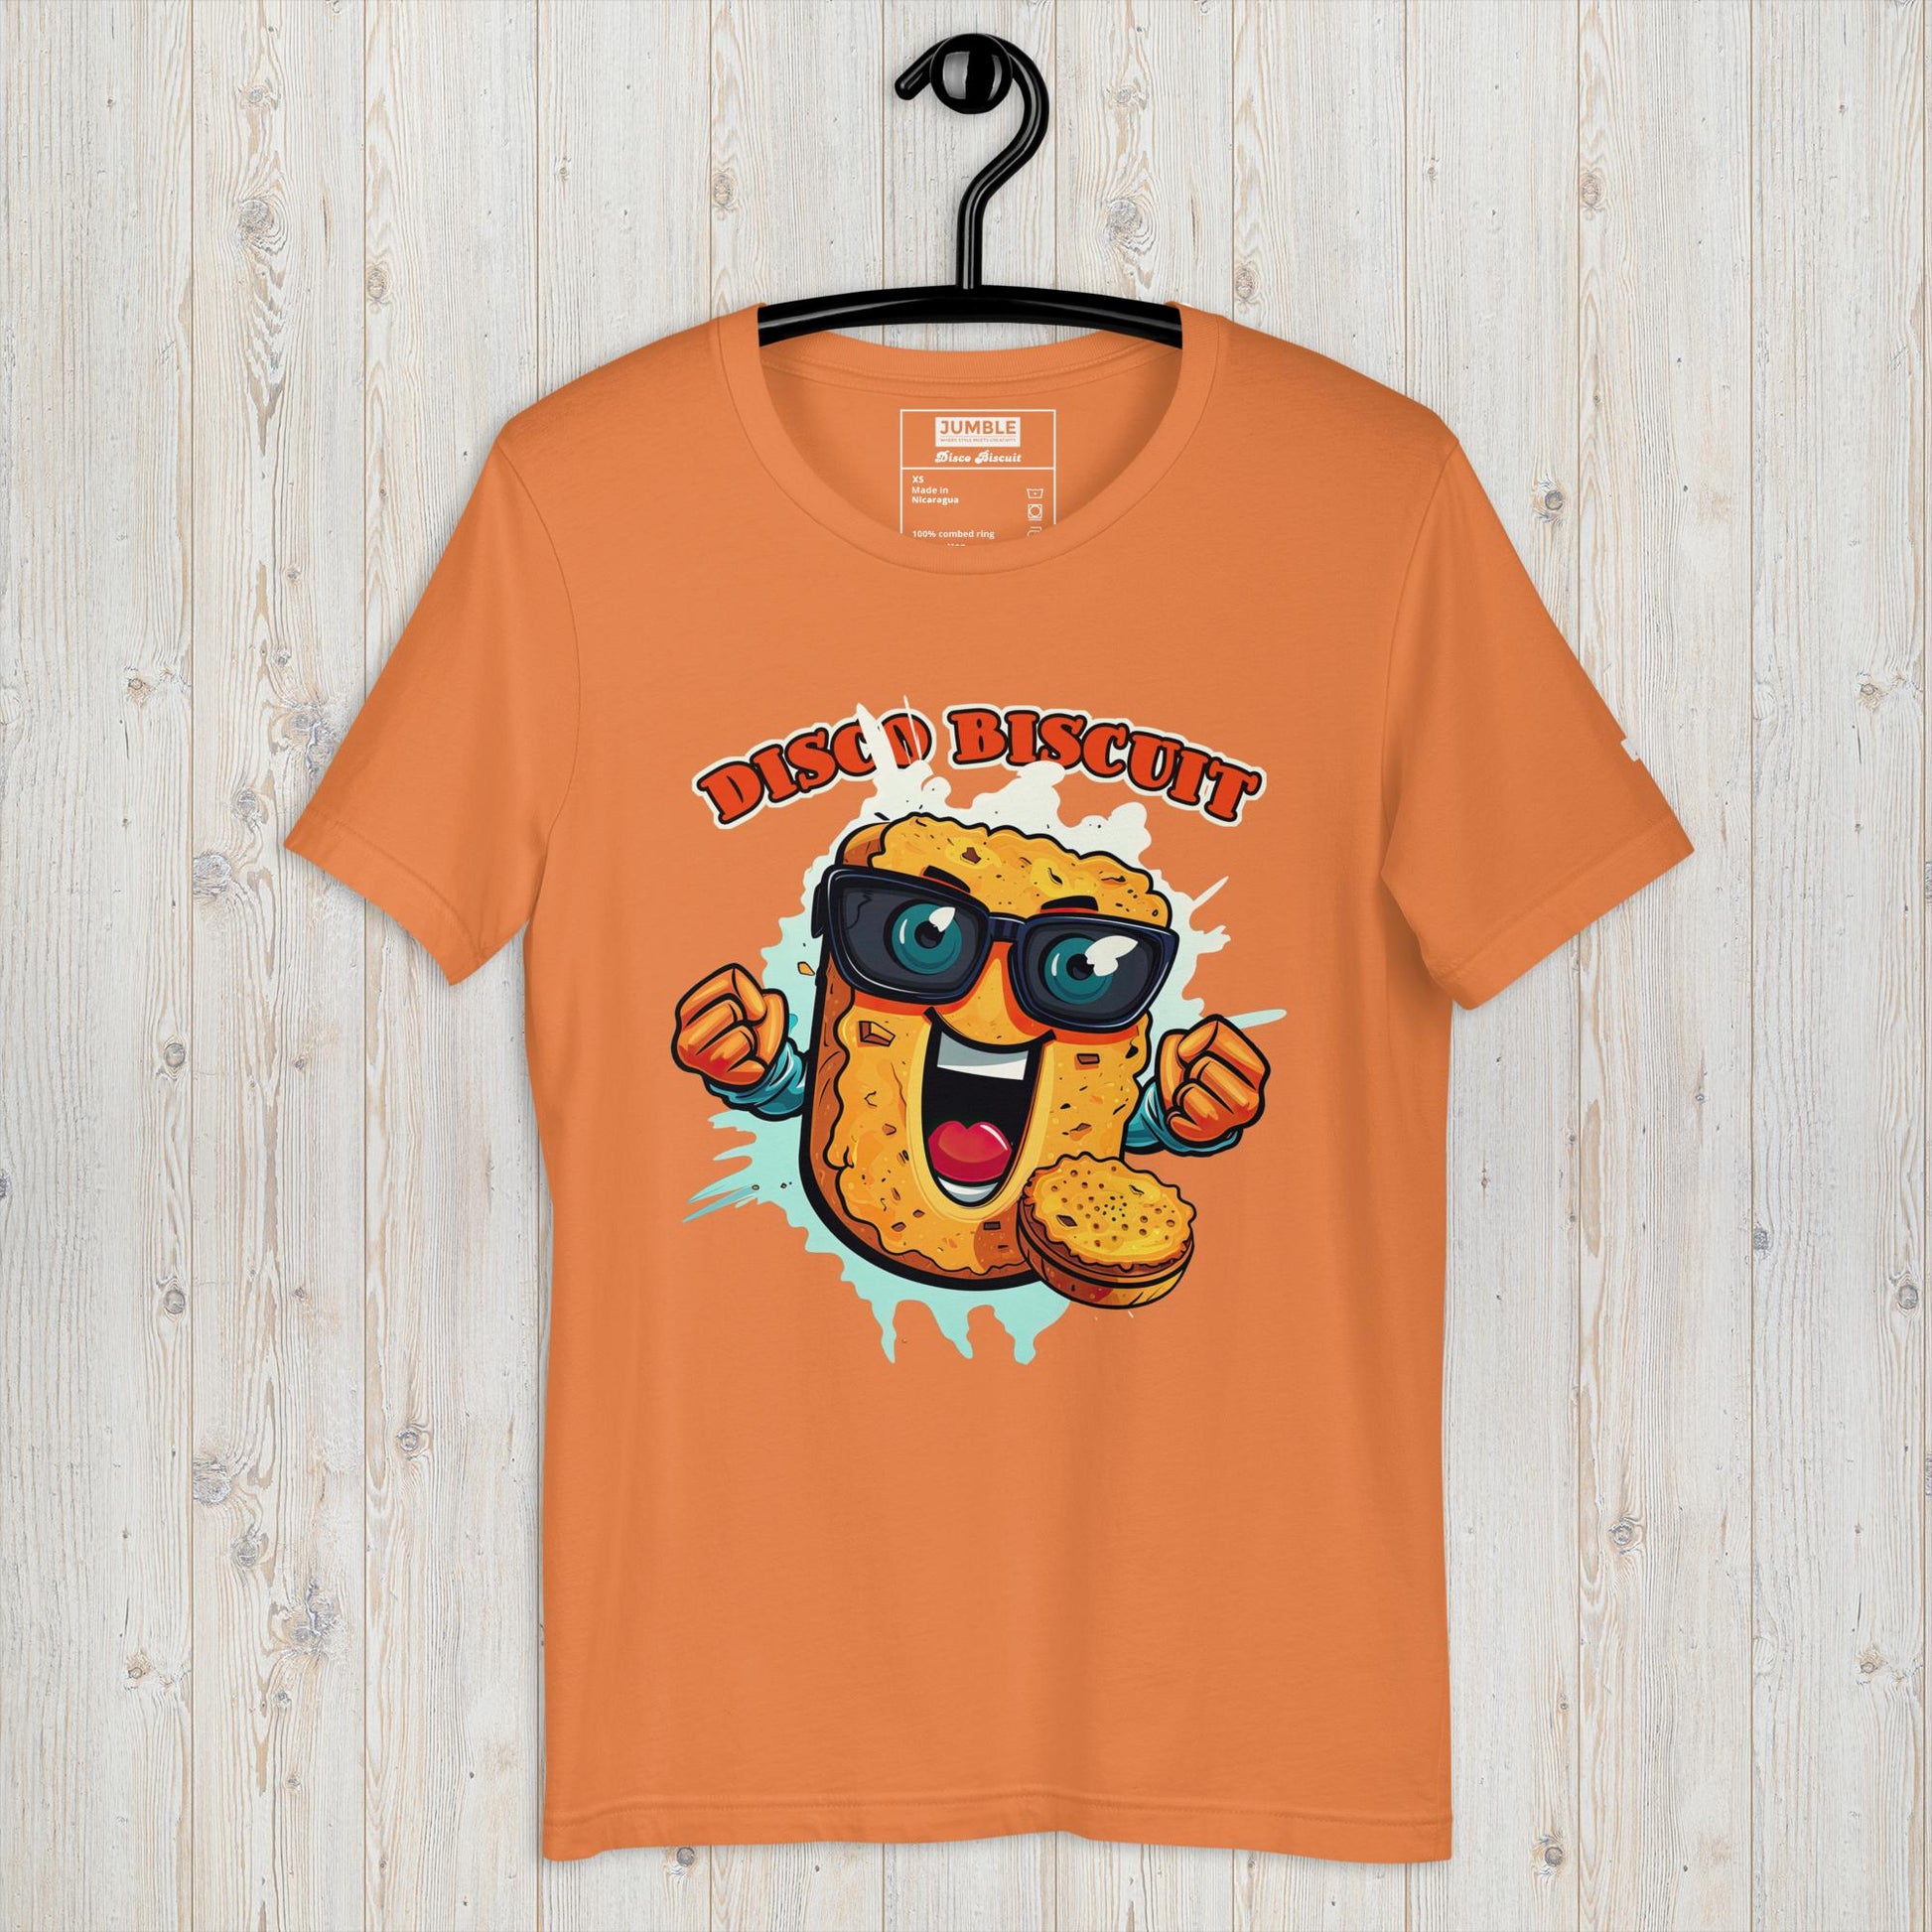 Disco Biscuit Unisex t-shirt- in orange, on hanger